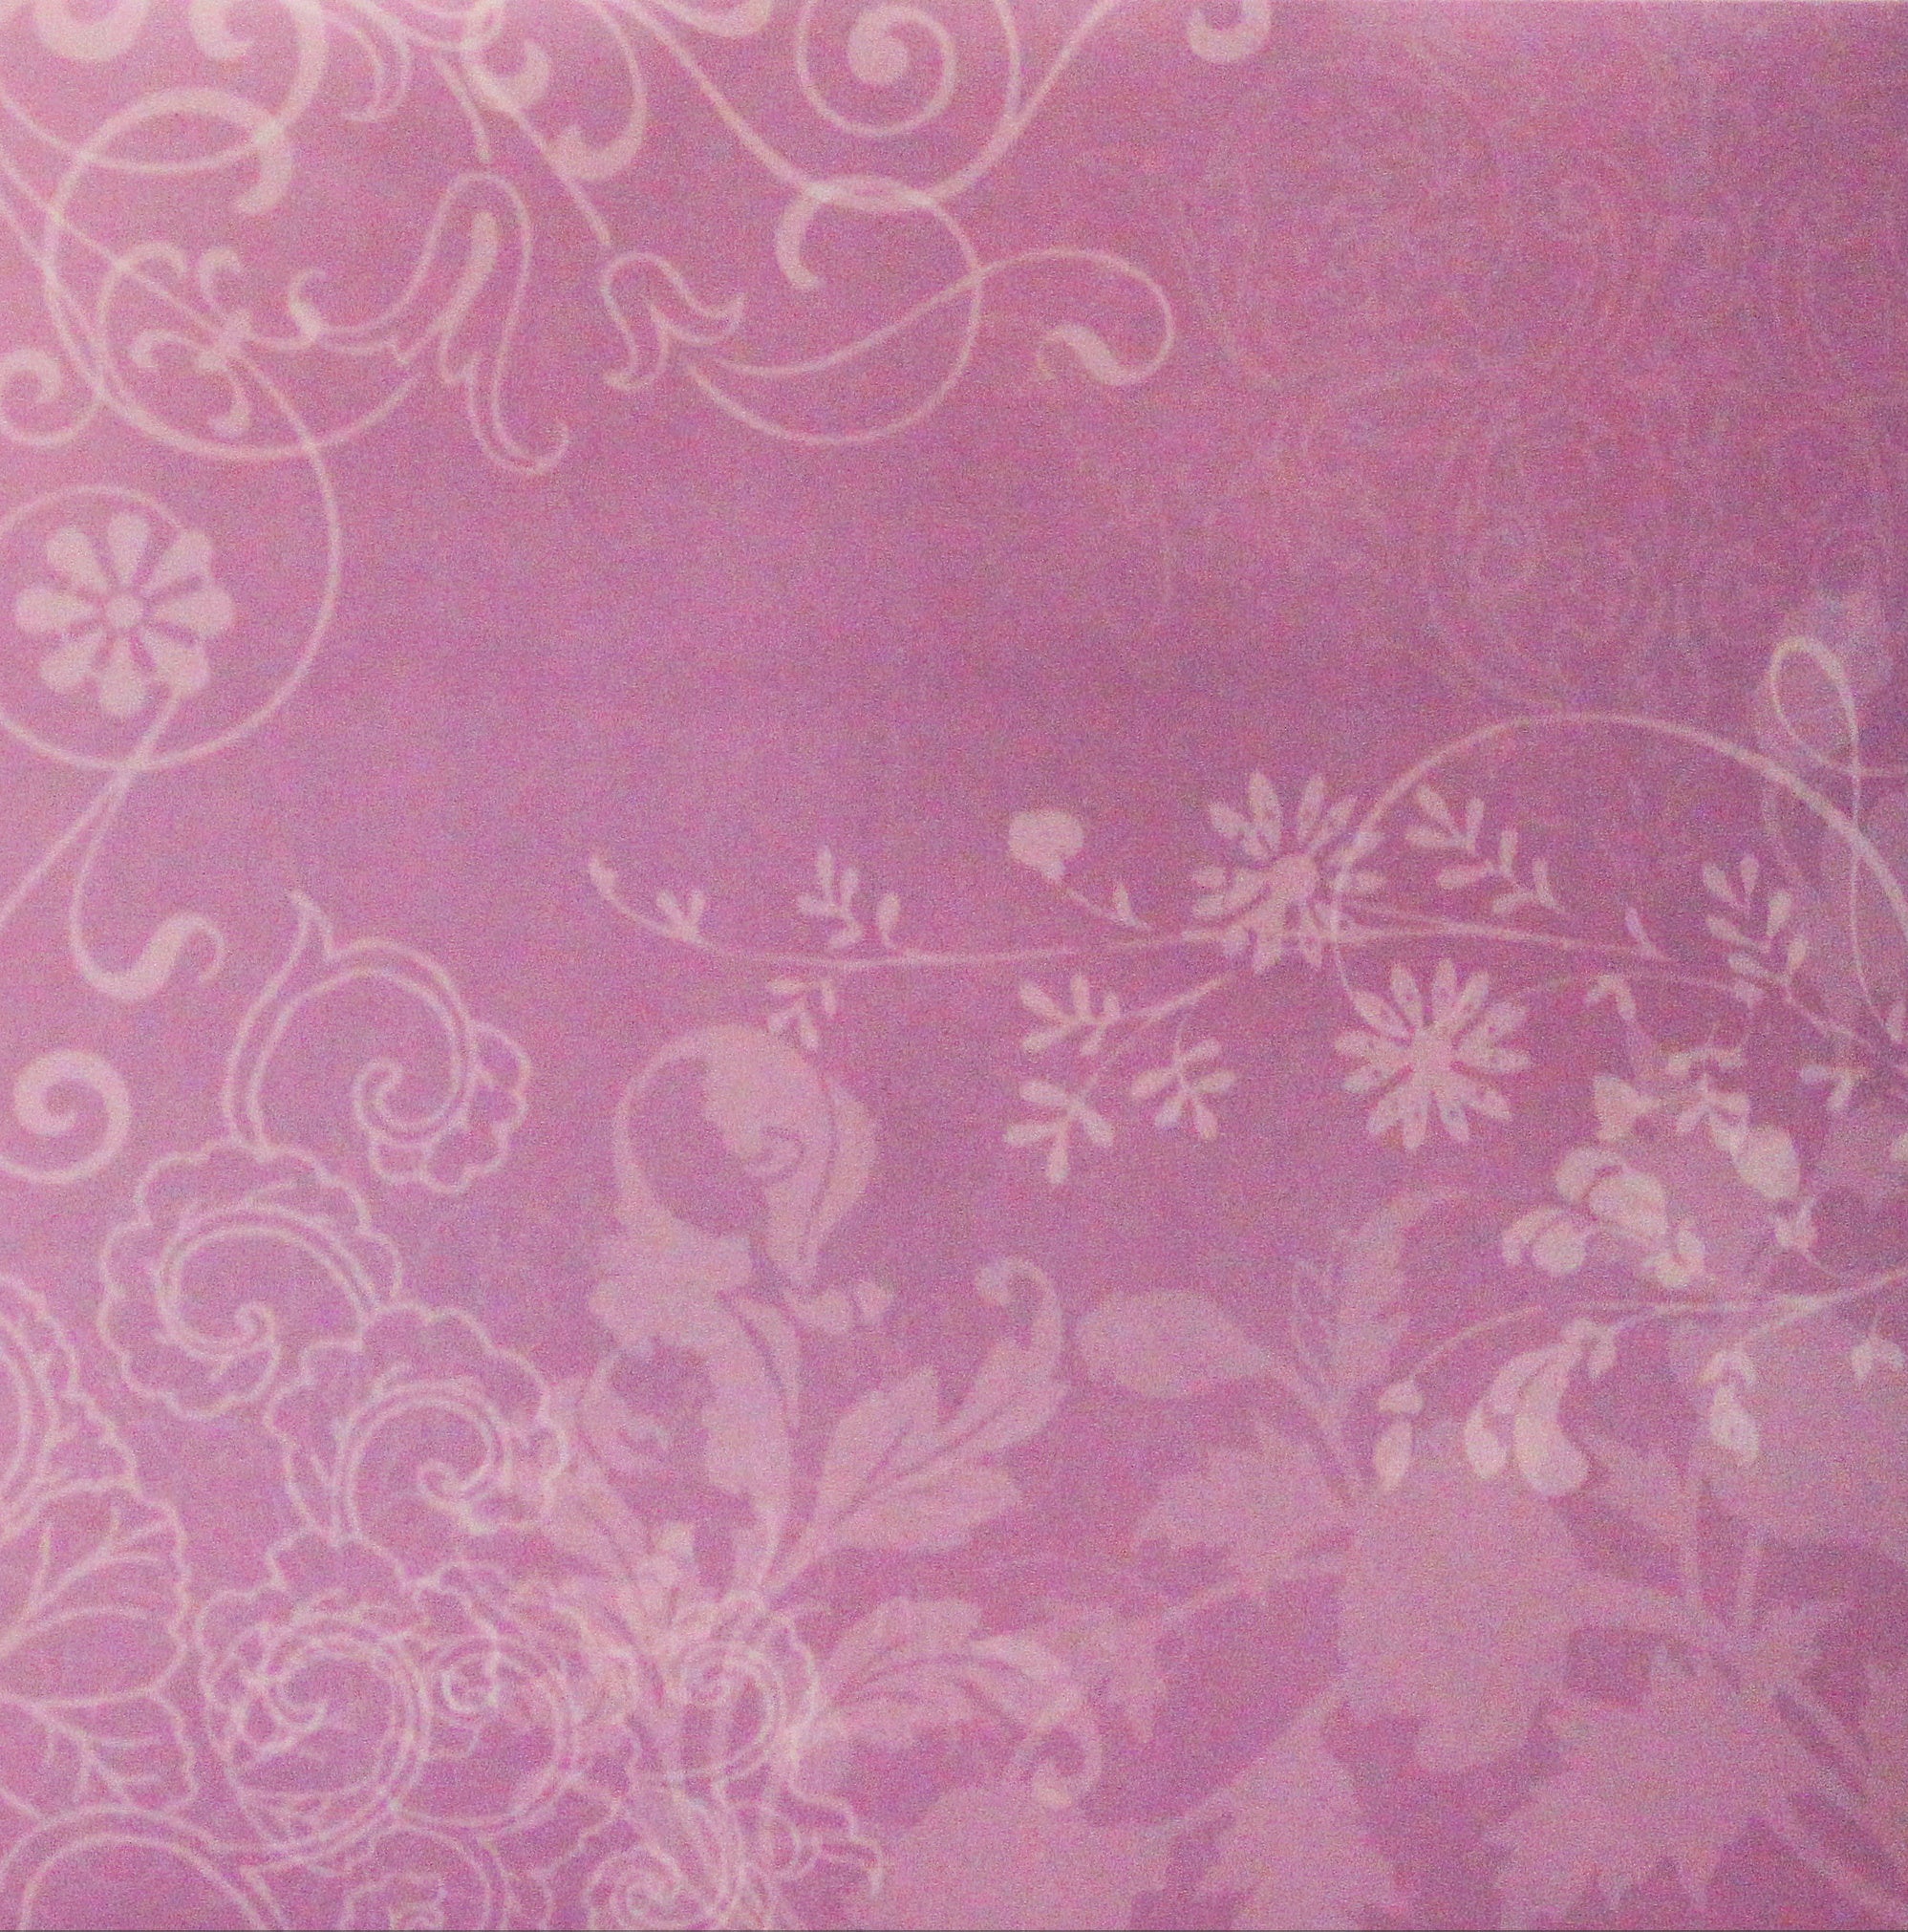 DCWV 12 X 12 Purple Floral Swirls Scrapbook Paper